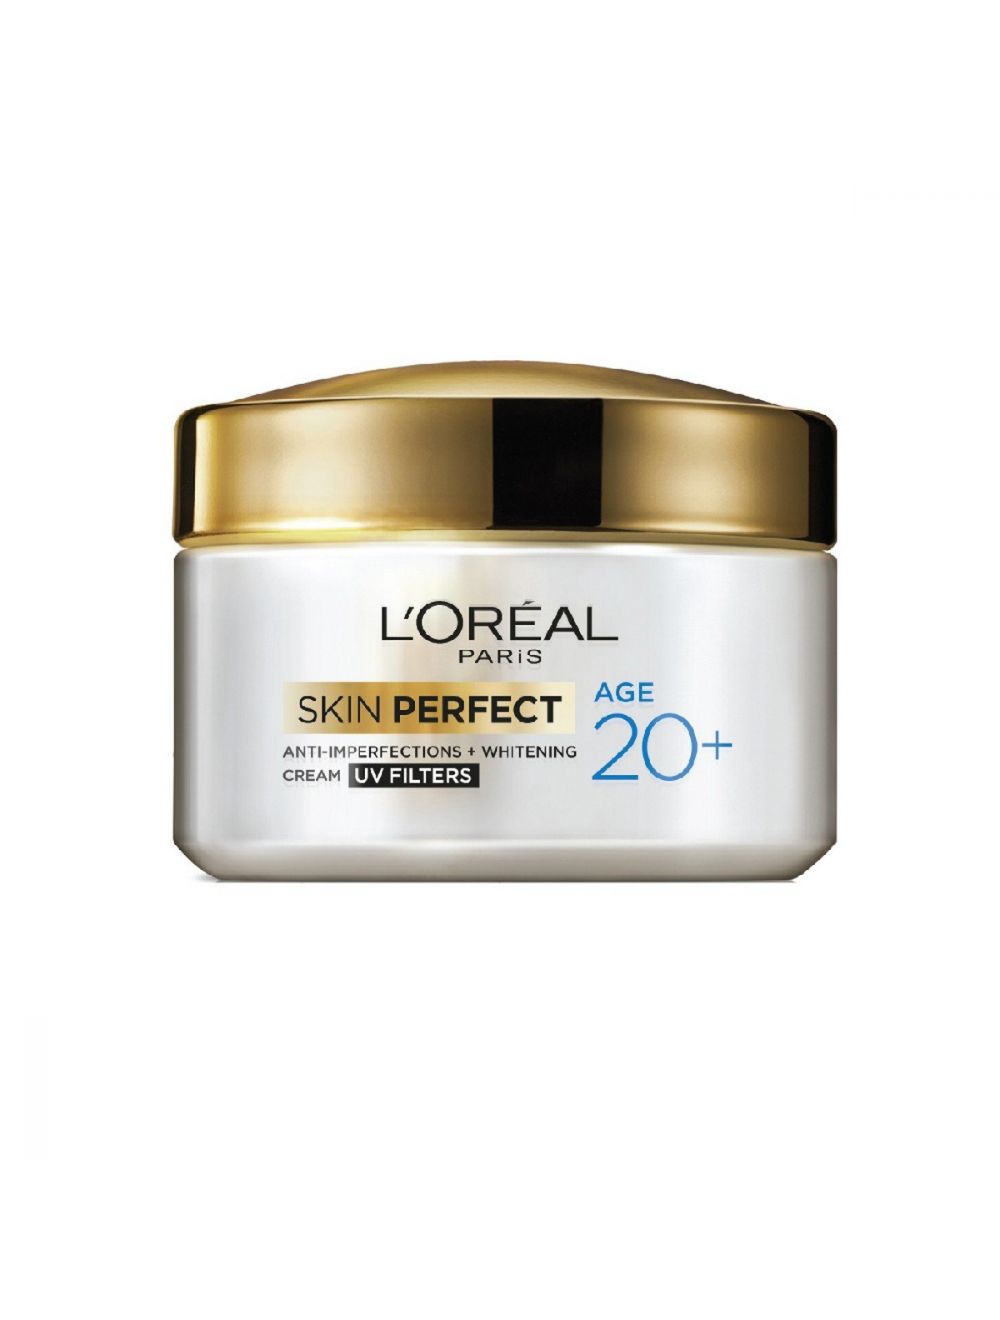 L'Oreal Paris Age 20+ Skin Perfect Cream UV Filters-50 gm - Niram